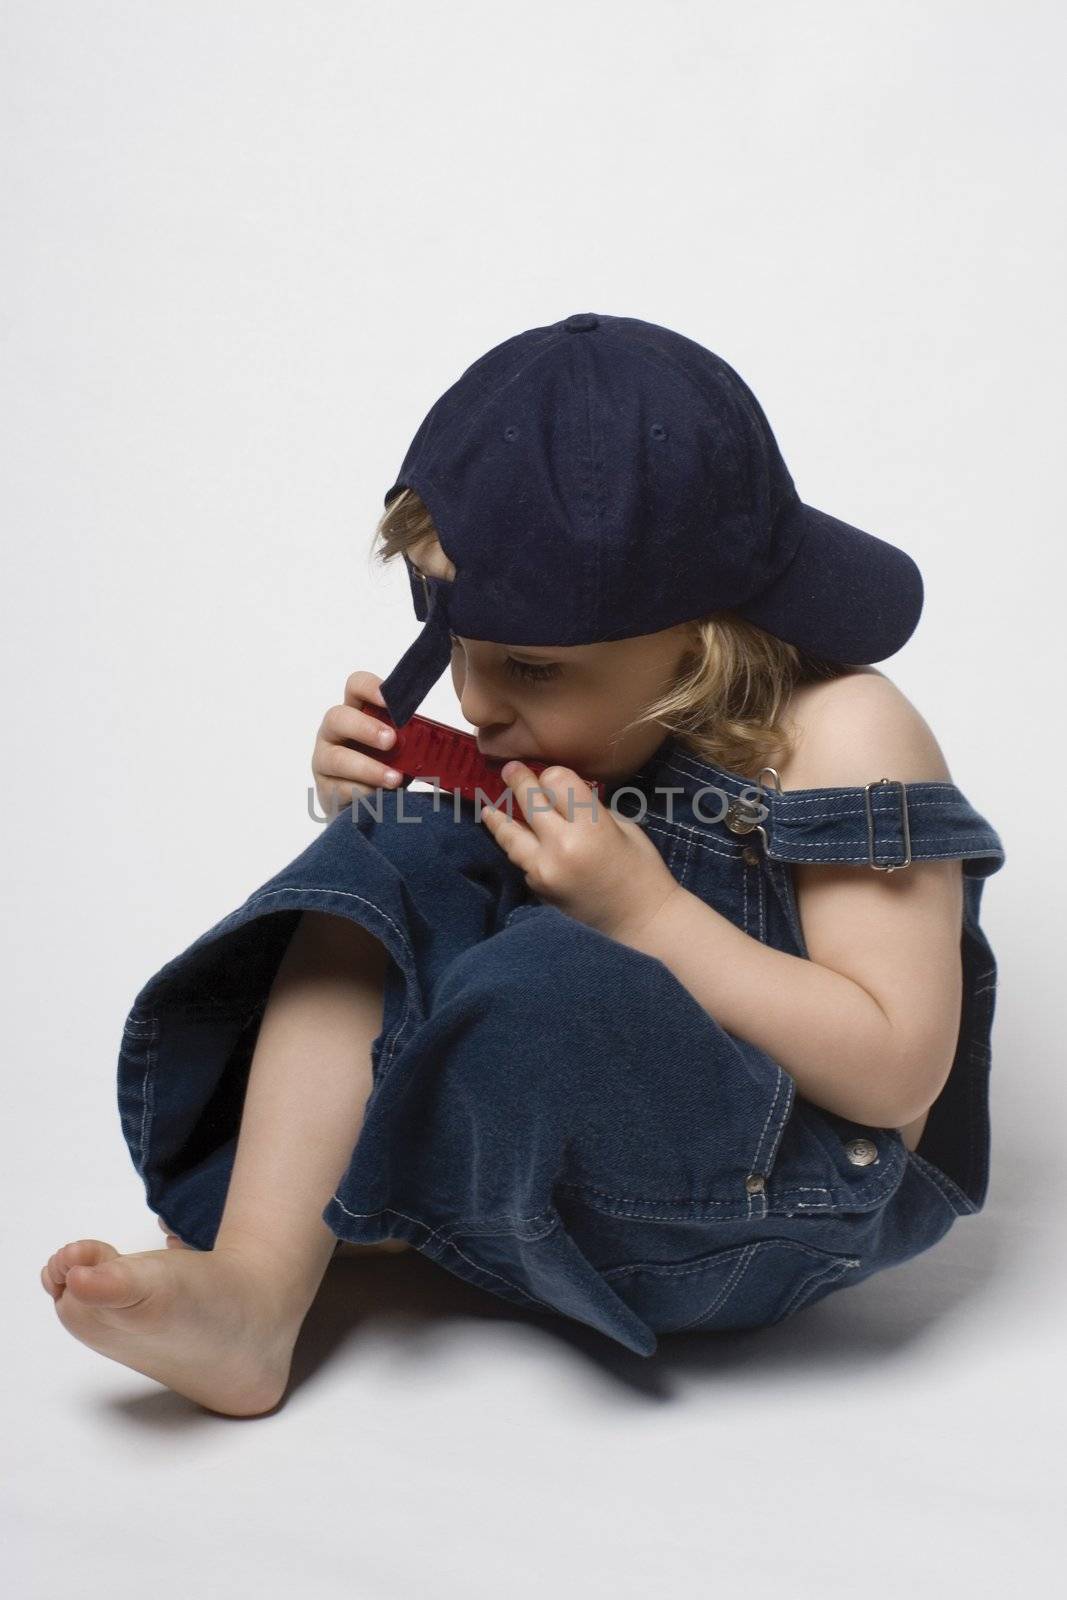 Kid playing harmonica by mypstudio